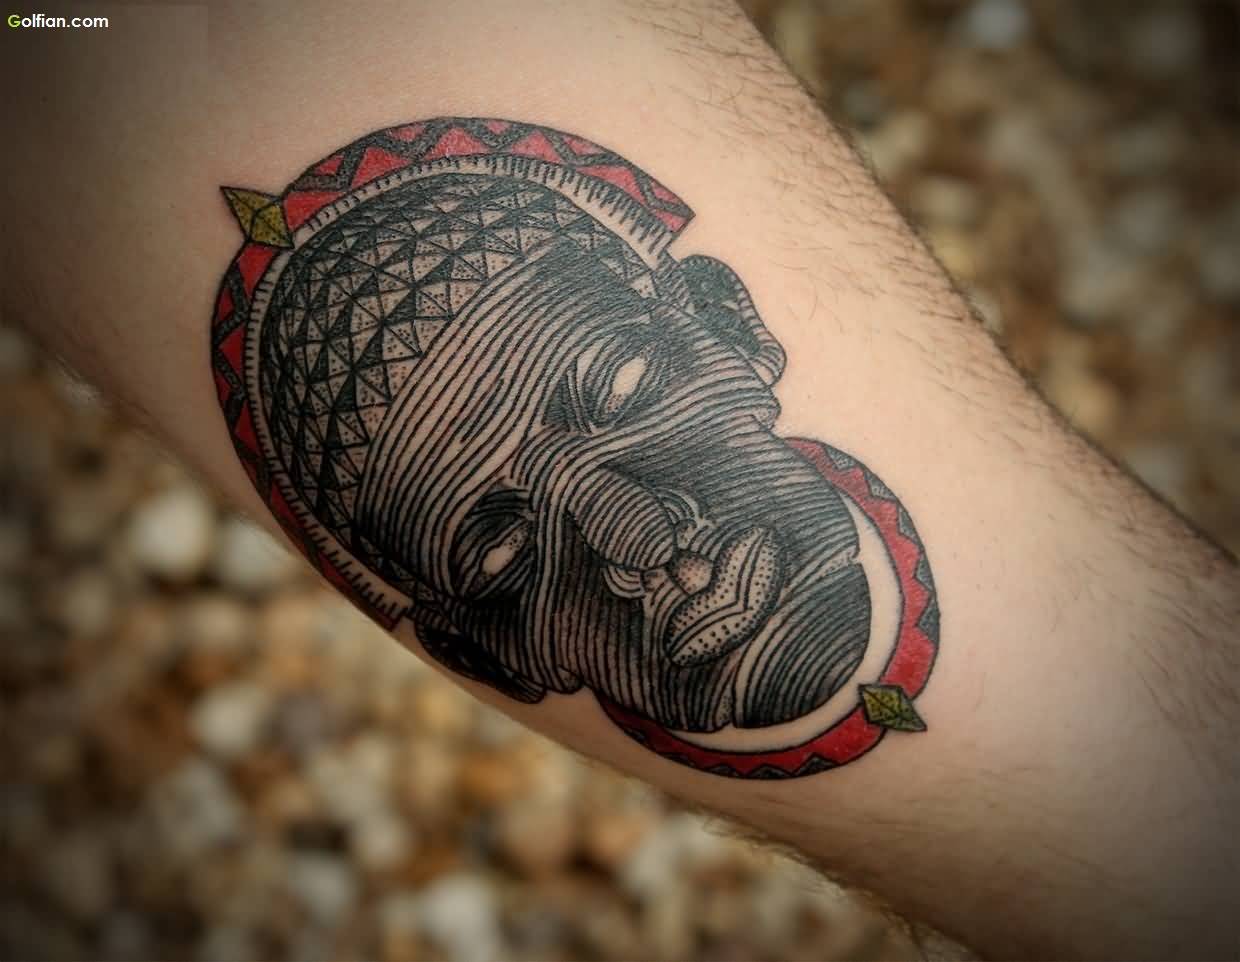 Realistic African themed half sleeve tattoo